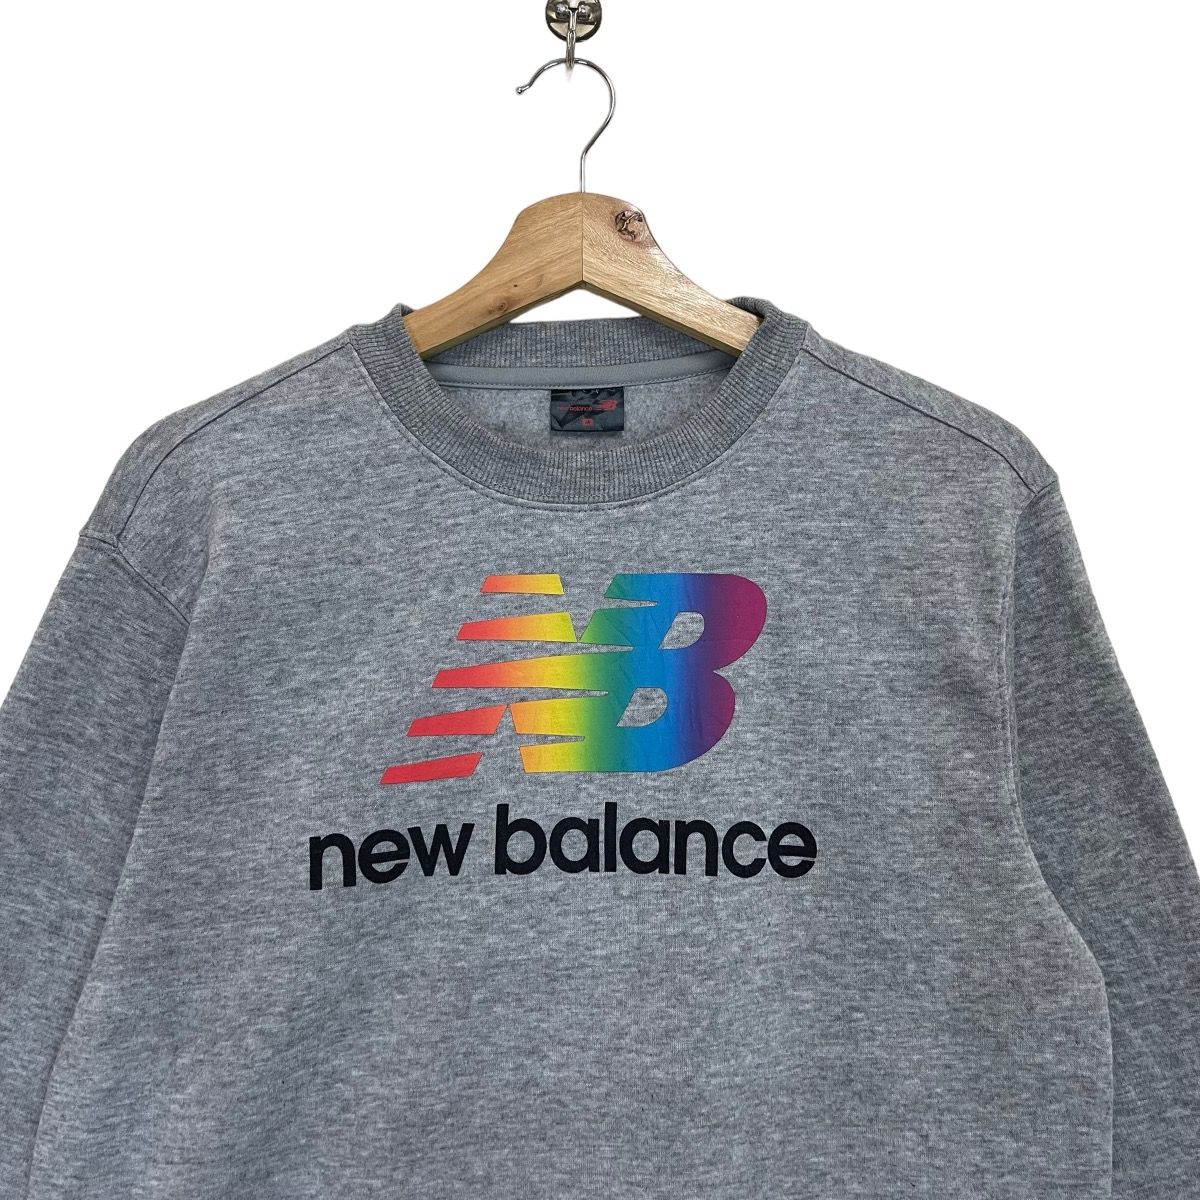 New Balance Big Logo Crew Neck Sweatshirt Size M - 4